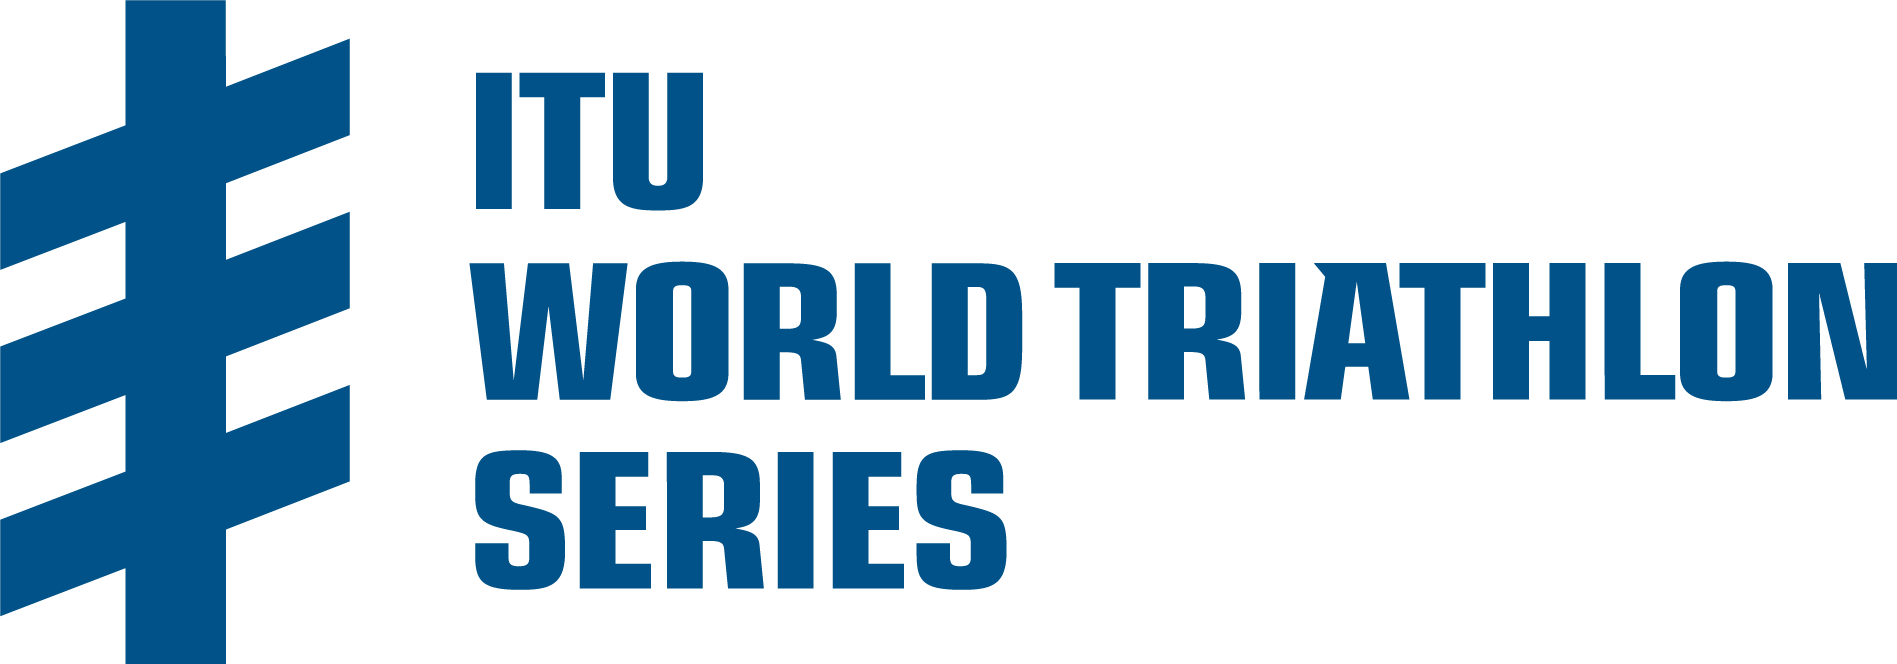 World Triathlon Series logo